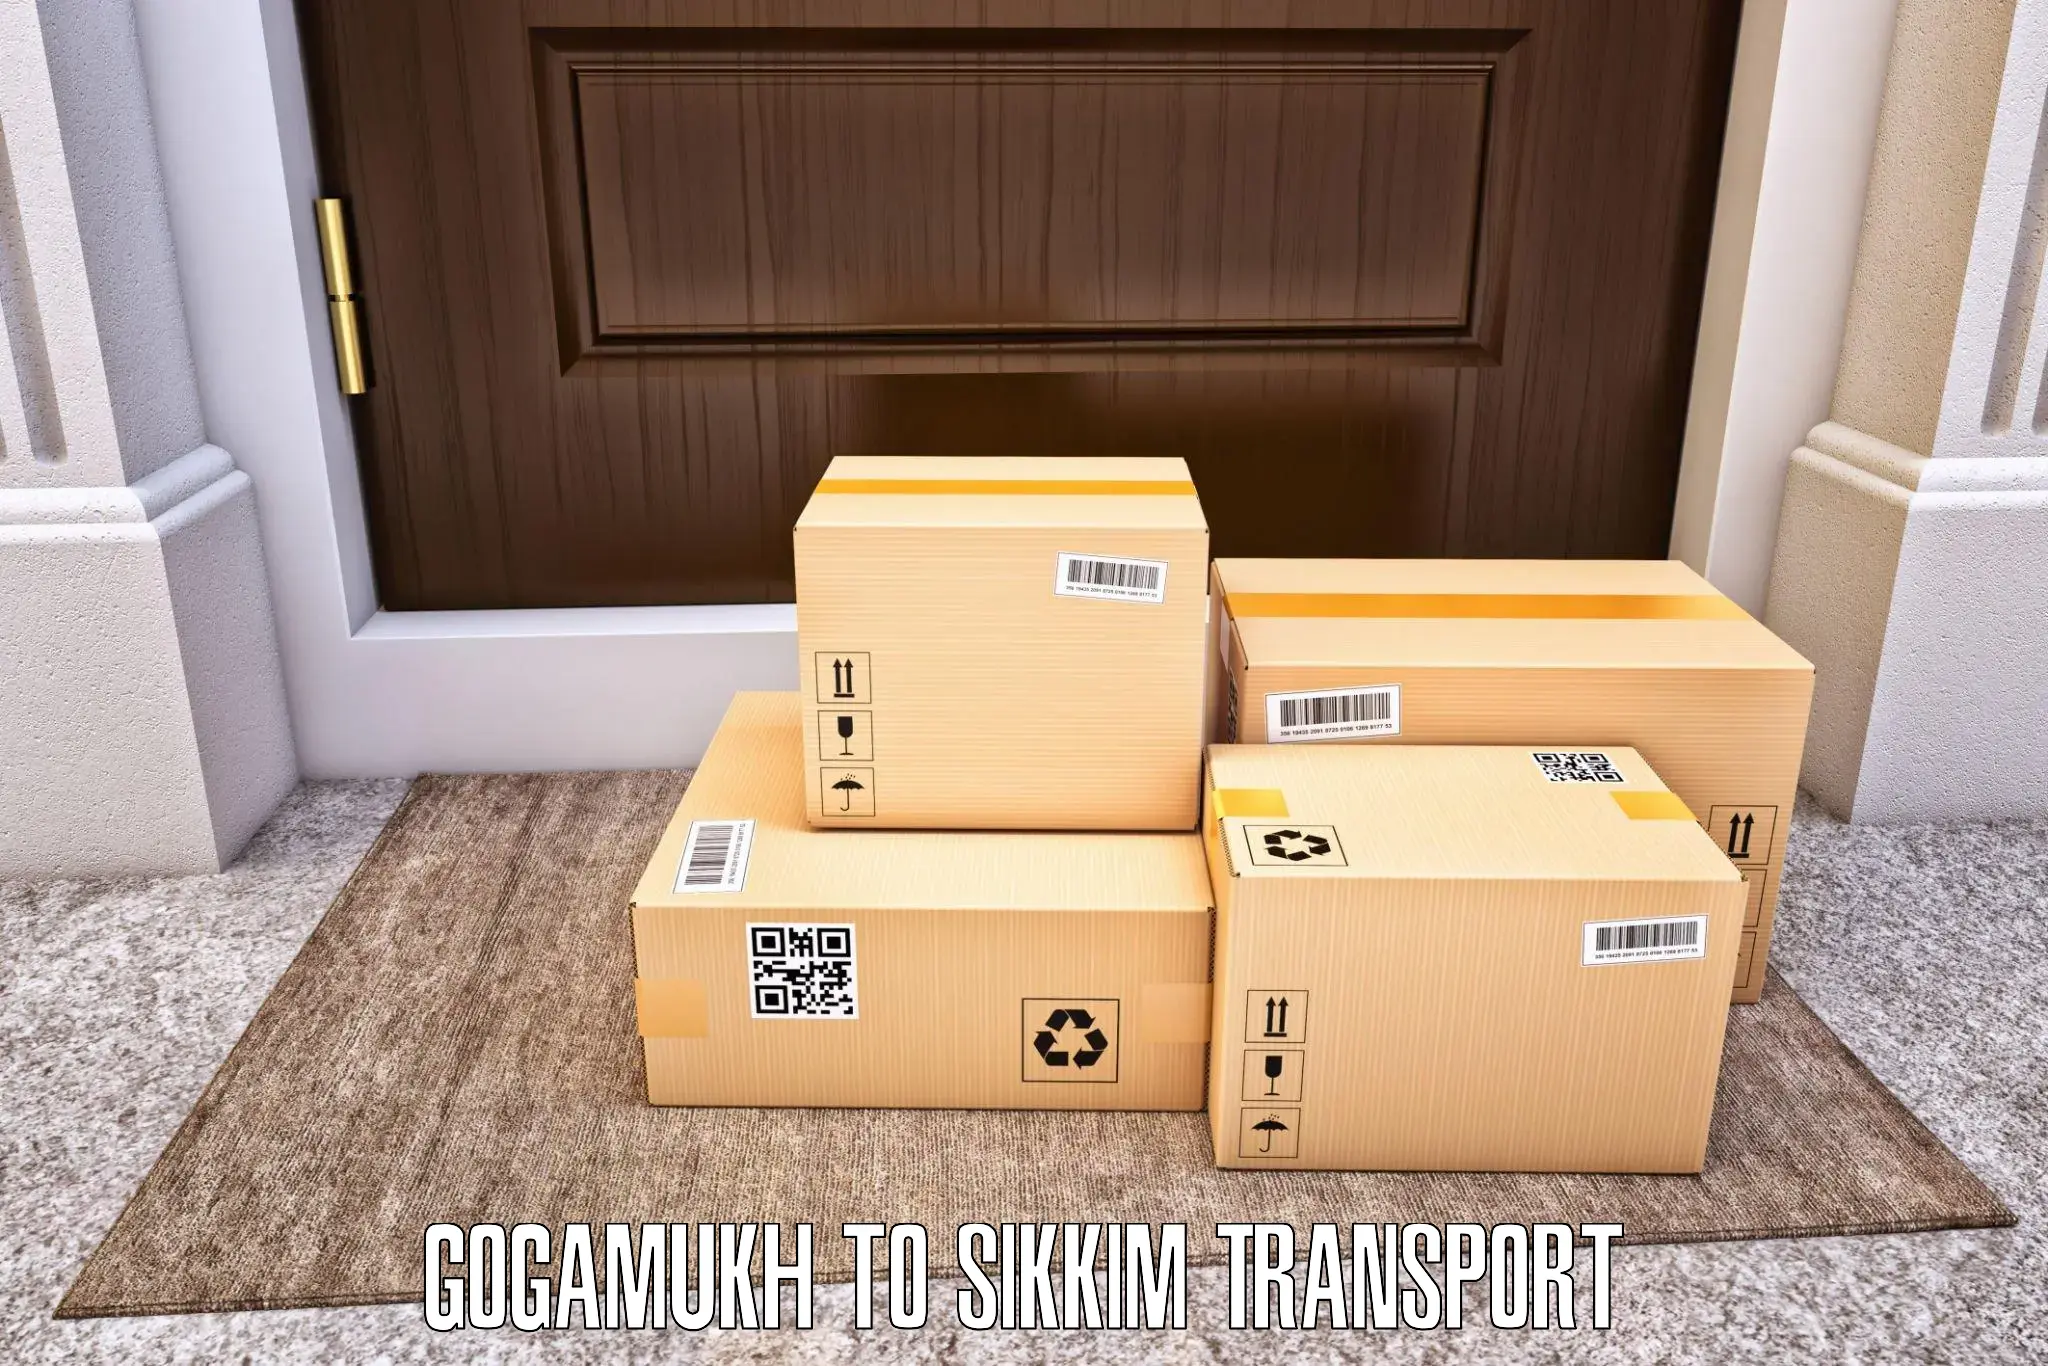 Vehicle transport services Gogamukh to South Sikkim